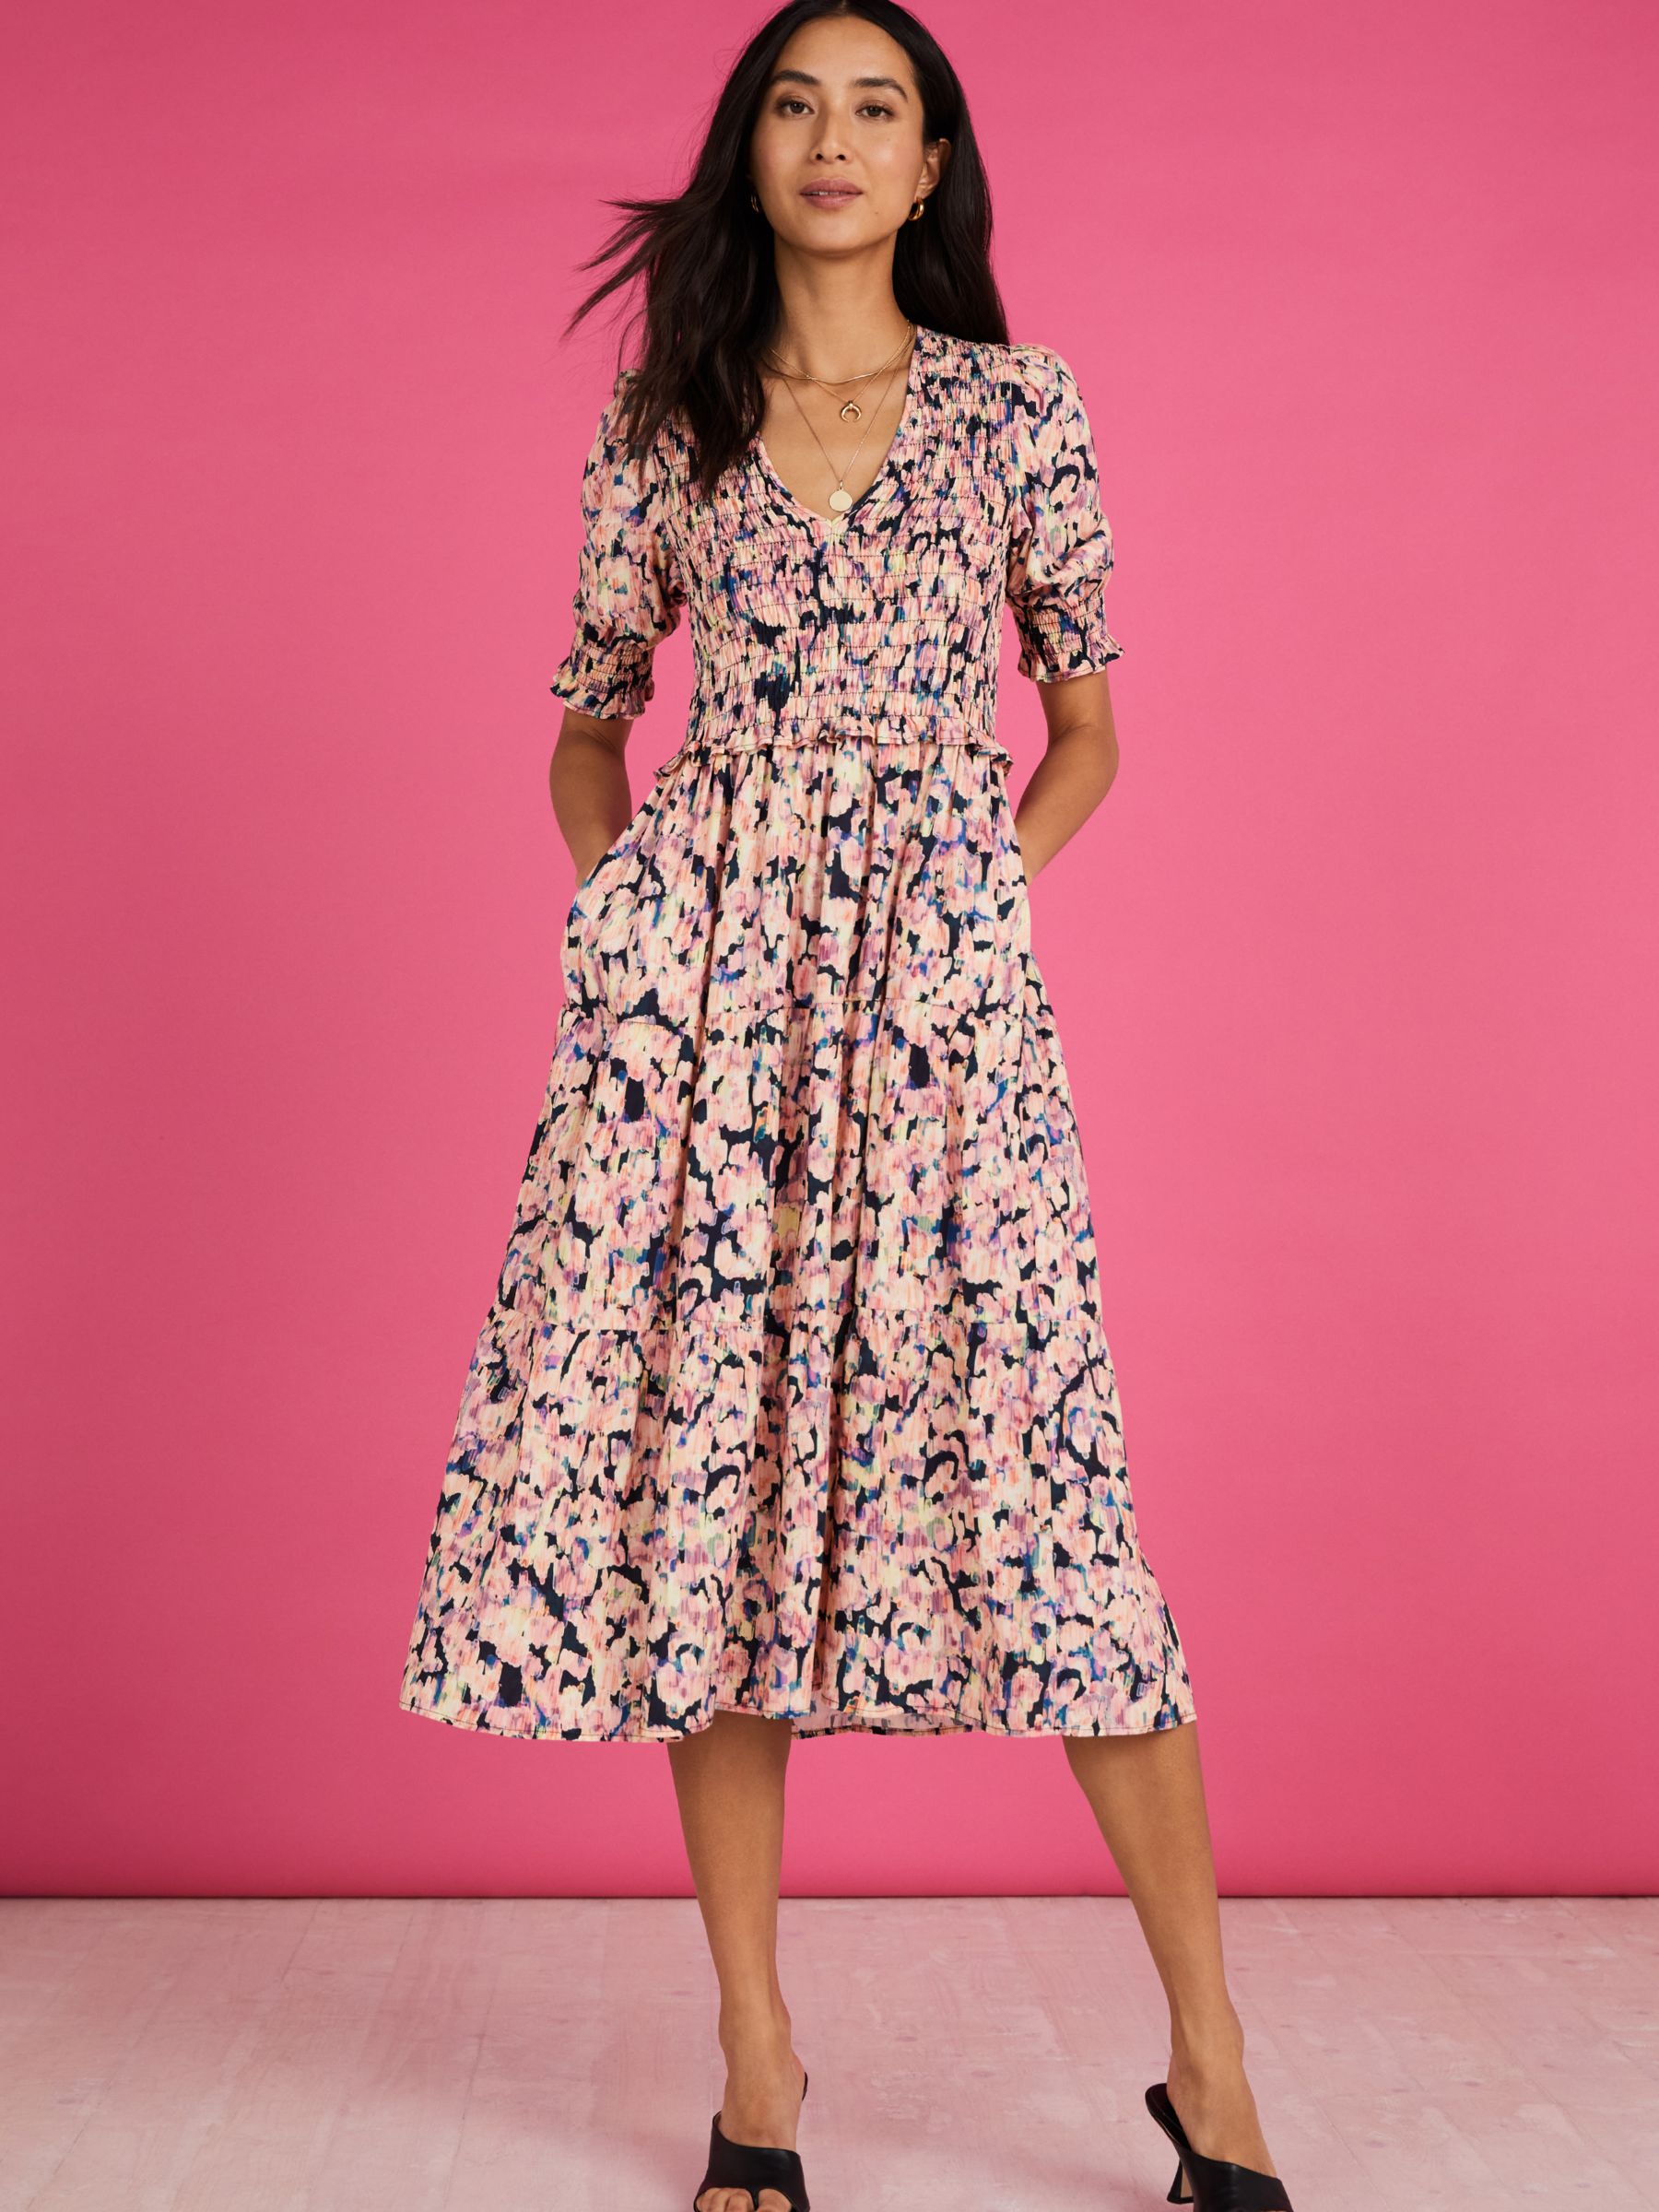 Baukjen Florence Smock Midi Dress, Pink Blur, 6